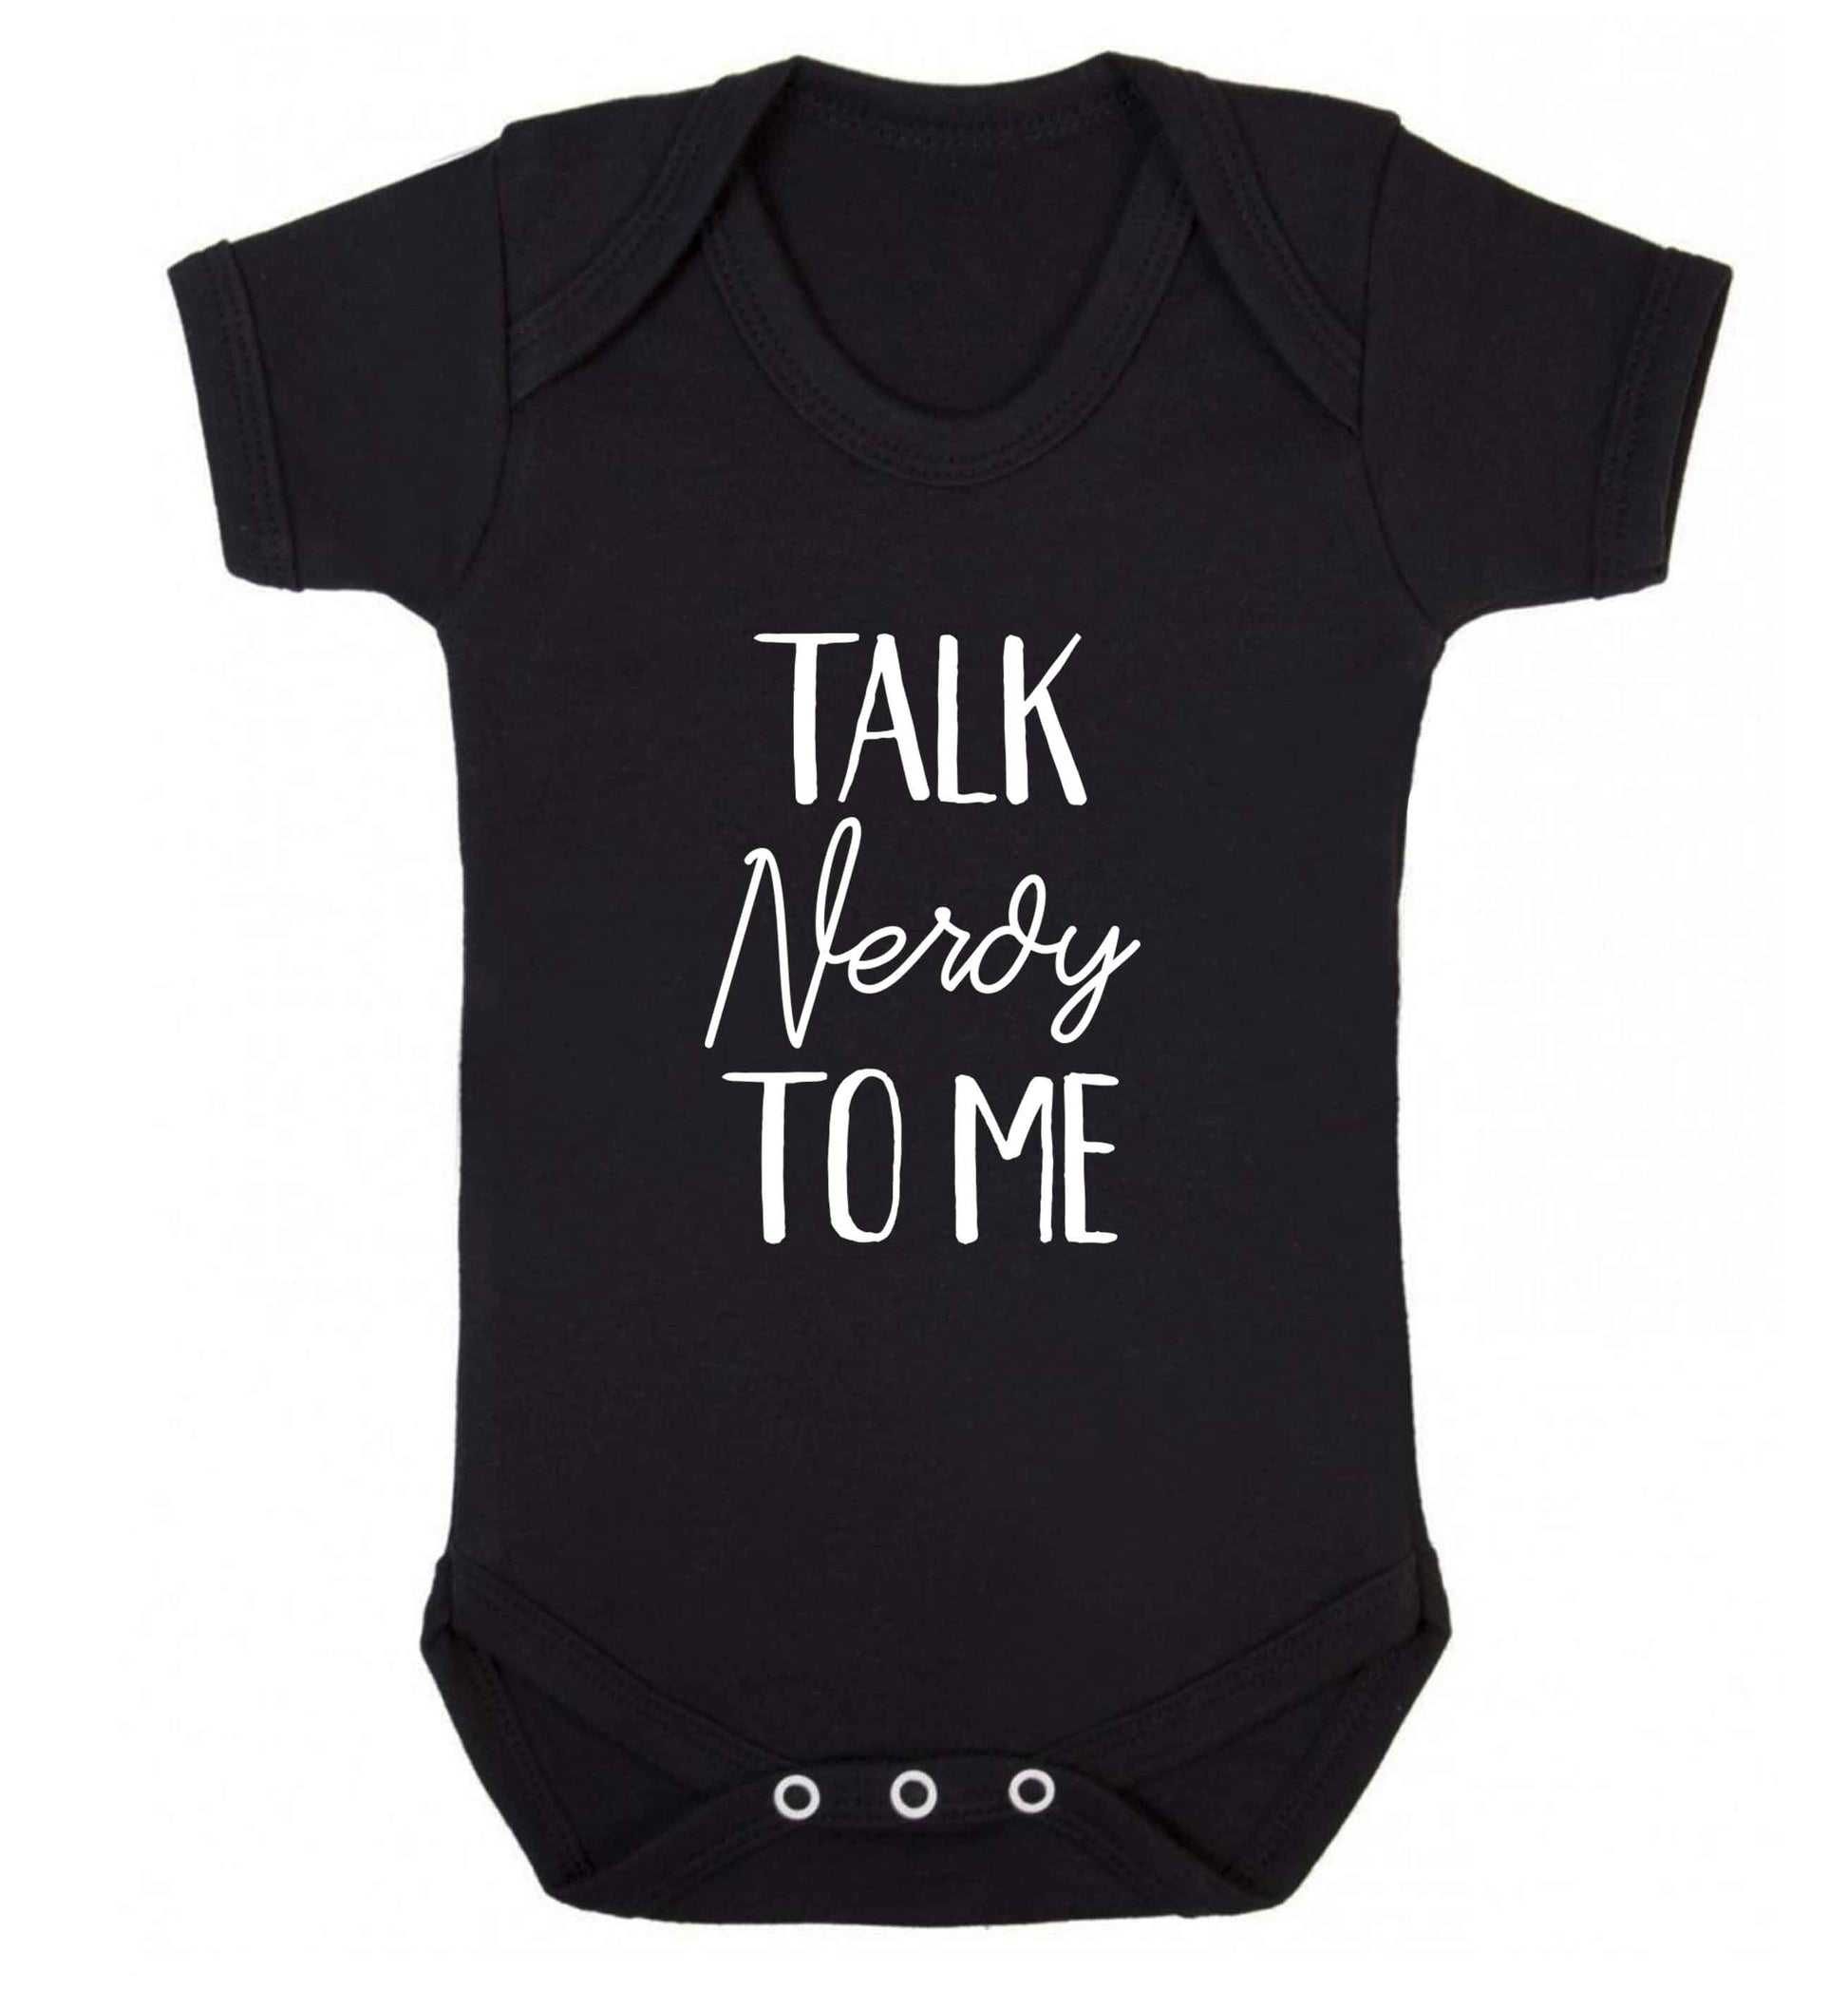 Talk nerdy to me baby vest black 18-24 months